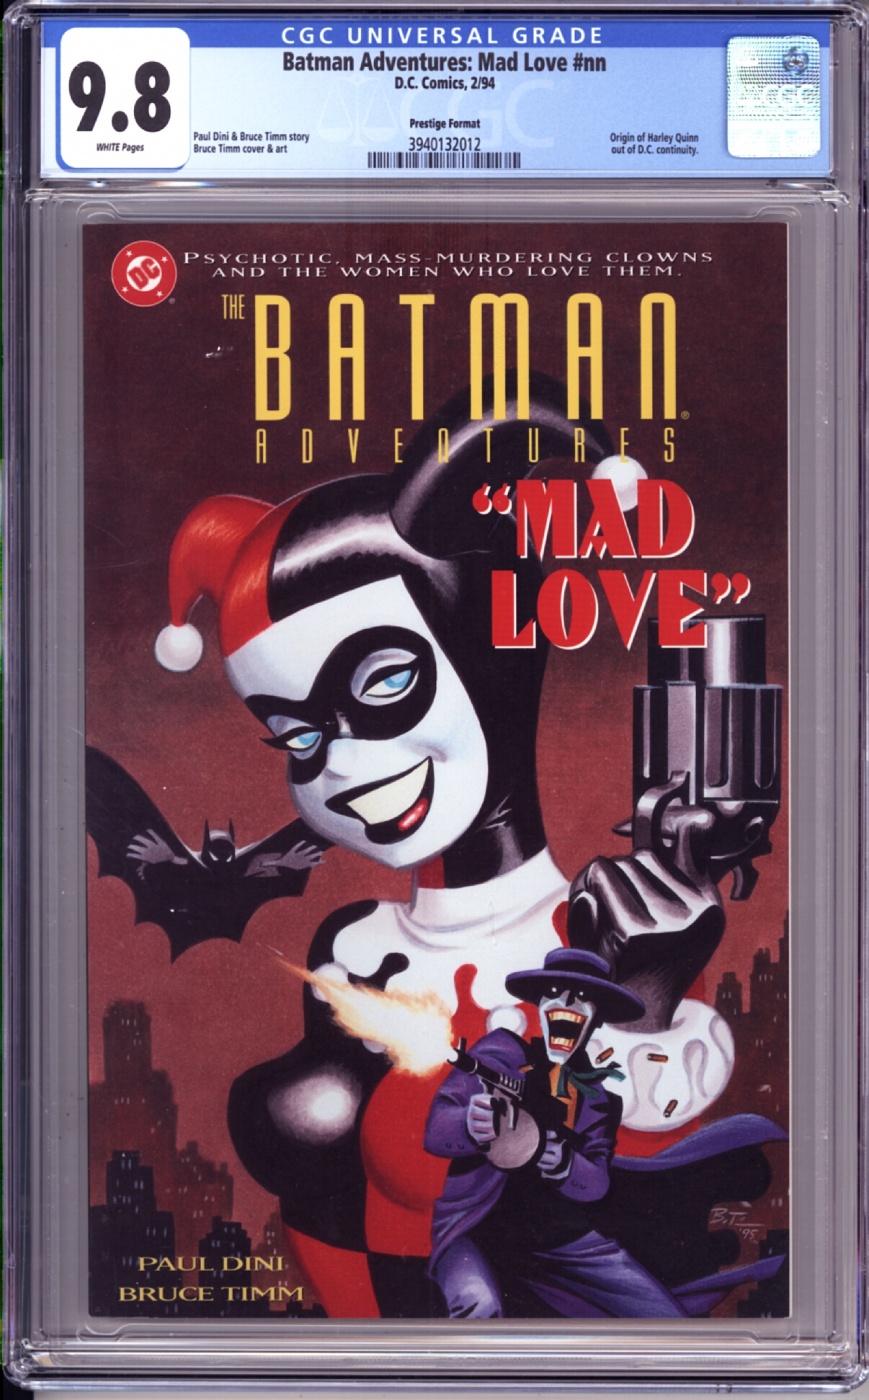 Batman Adventures: Mad Love #nn (Prestige Format) CGC  |  